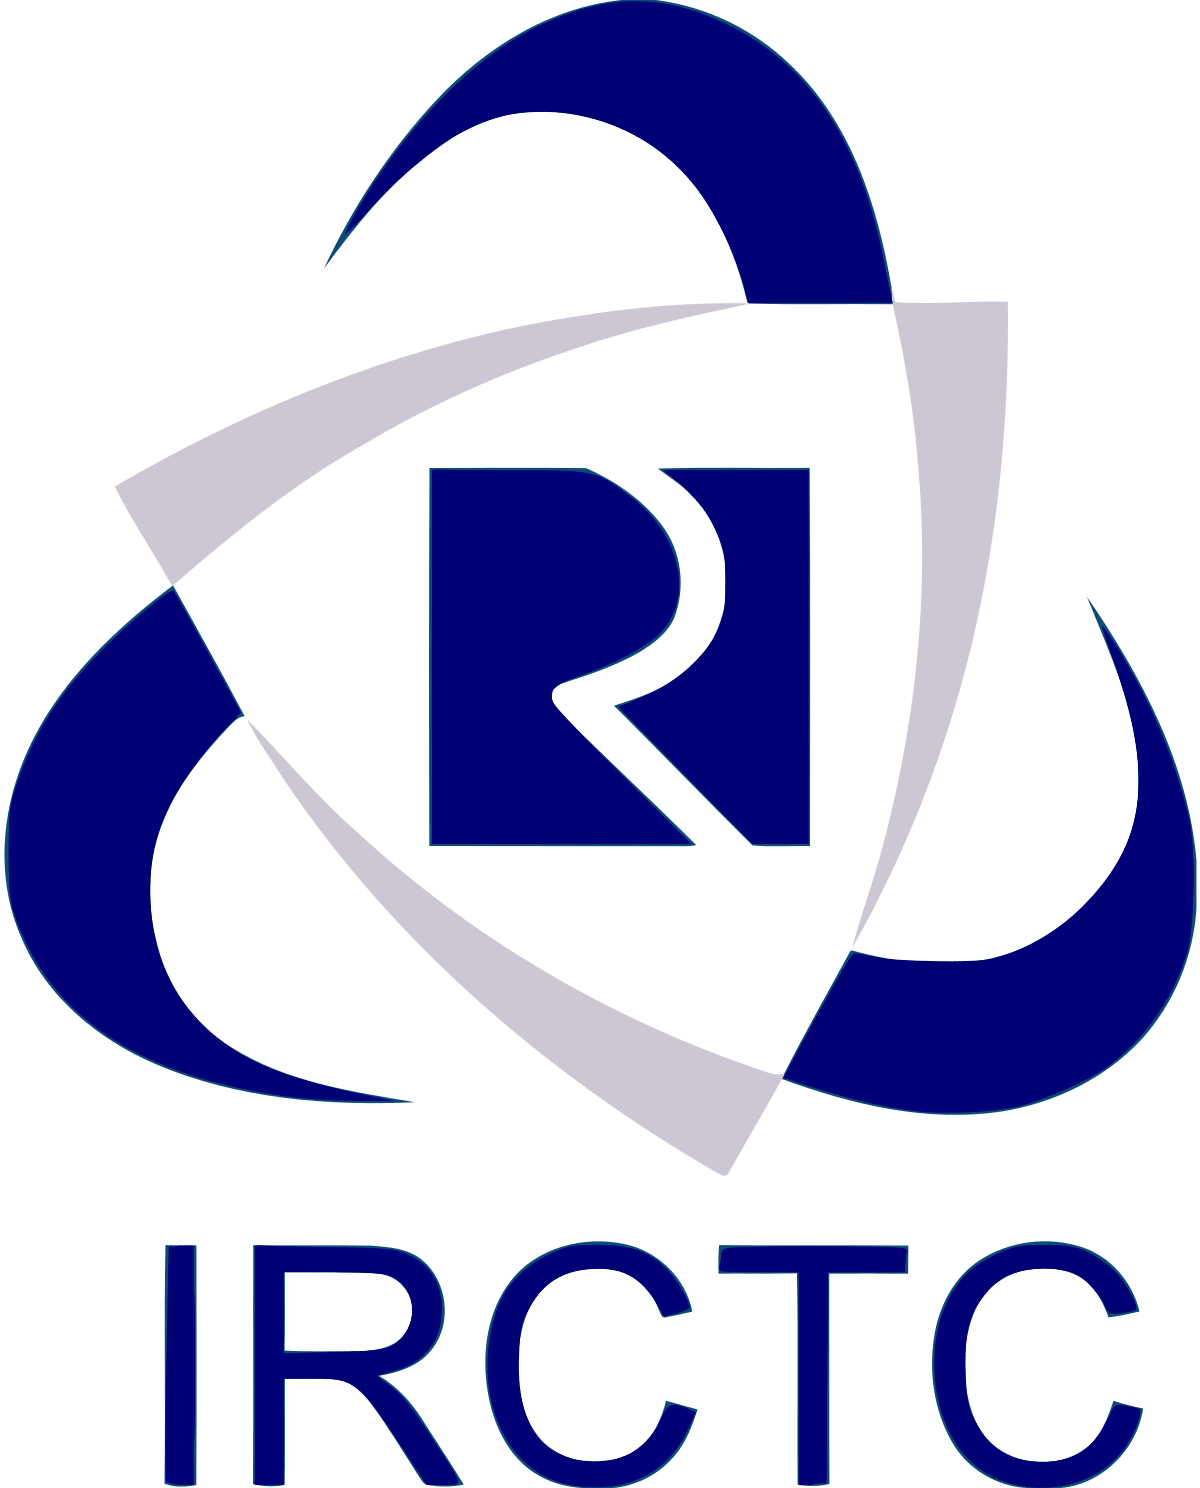 IRCTC Share Price History- 